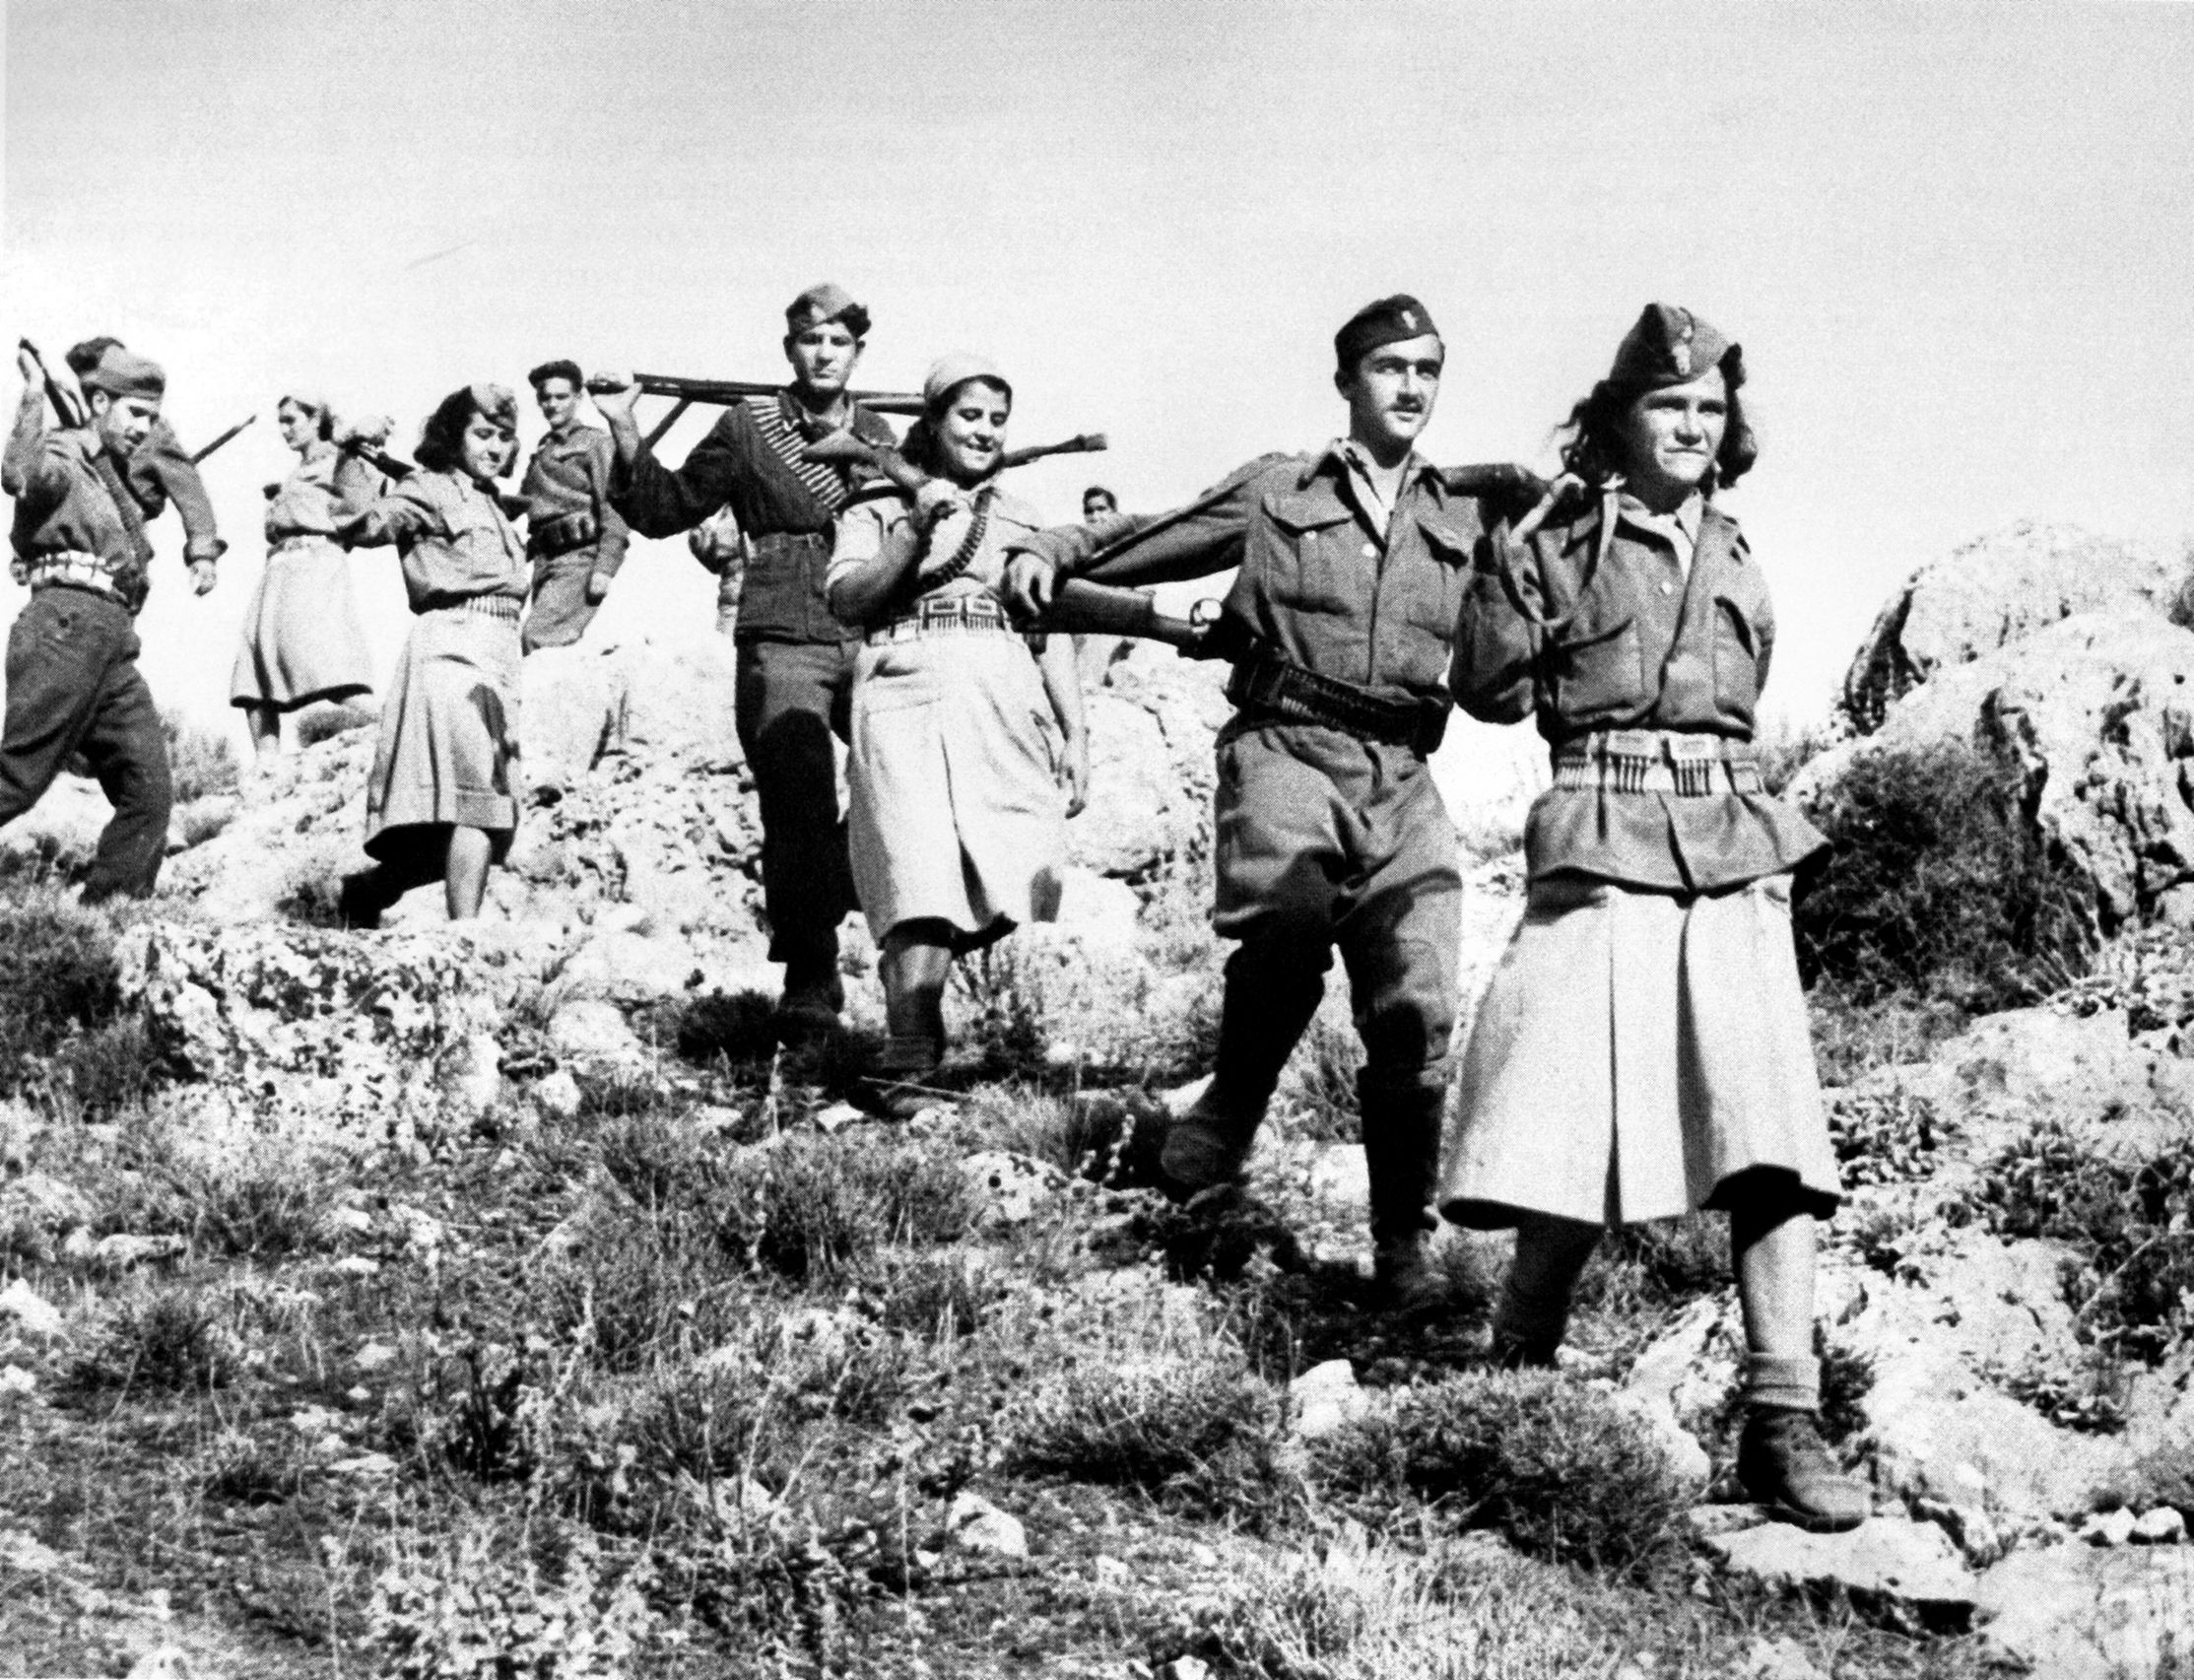 Greek women served alongside men in communist partisan units (EAM-ELAS-EKKM-EDES) that operated in the mountains.